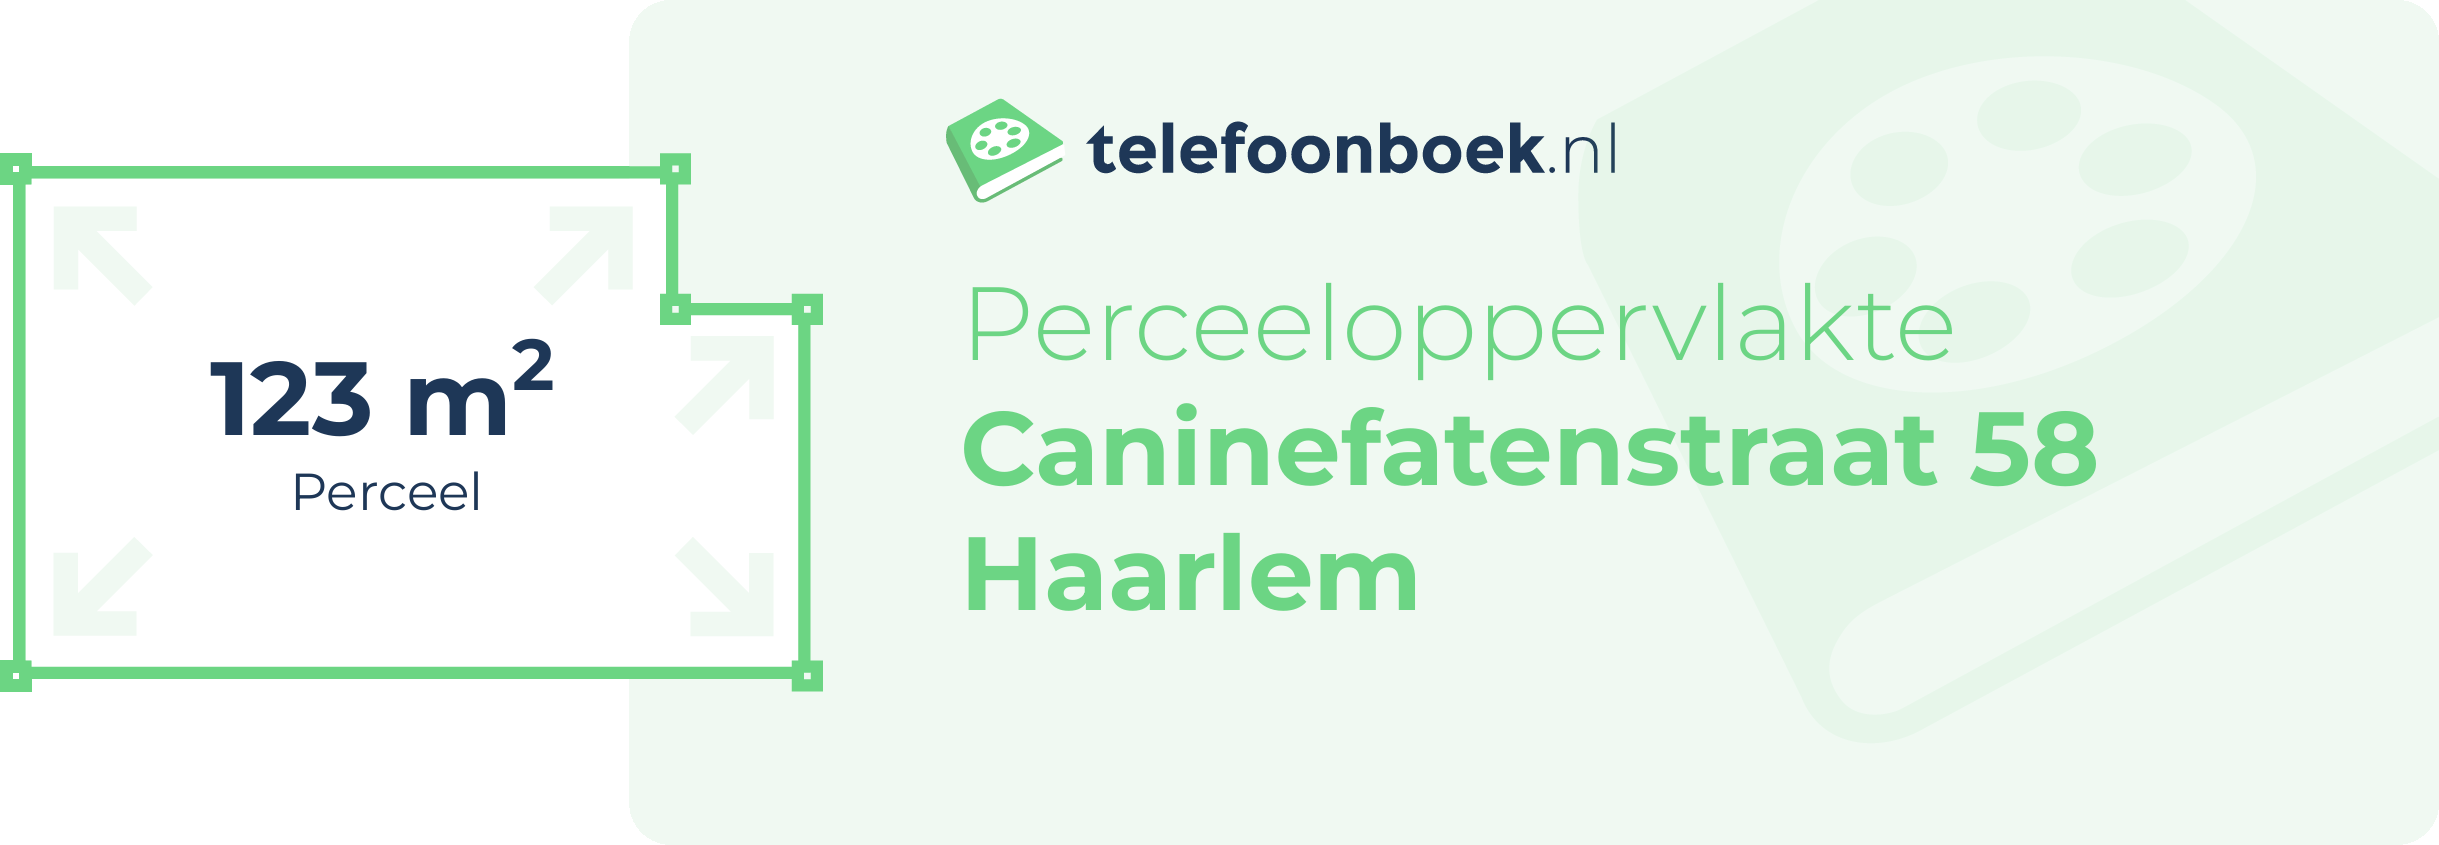 Perceeloppervlakte Caninefatenstraat 58 Haarlem